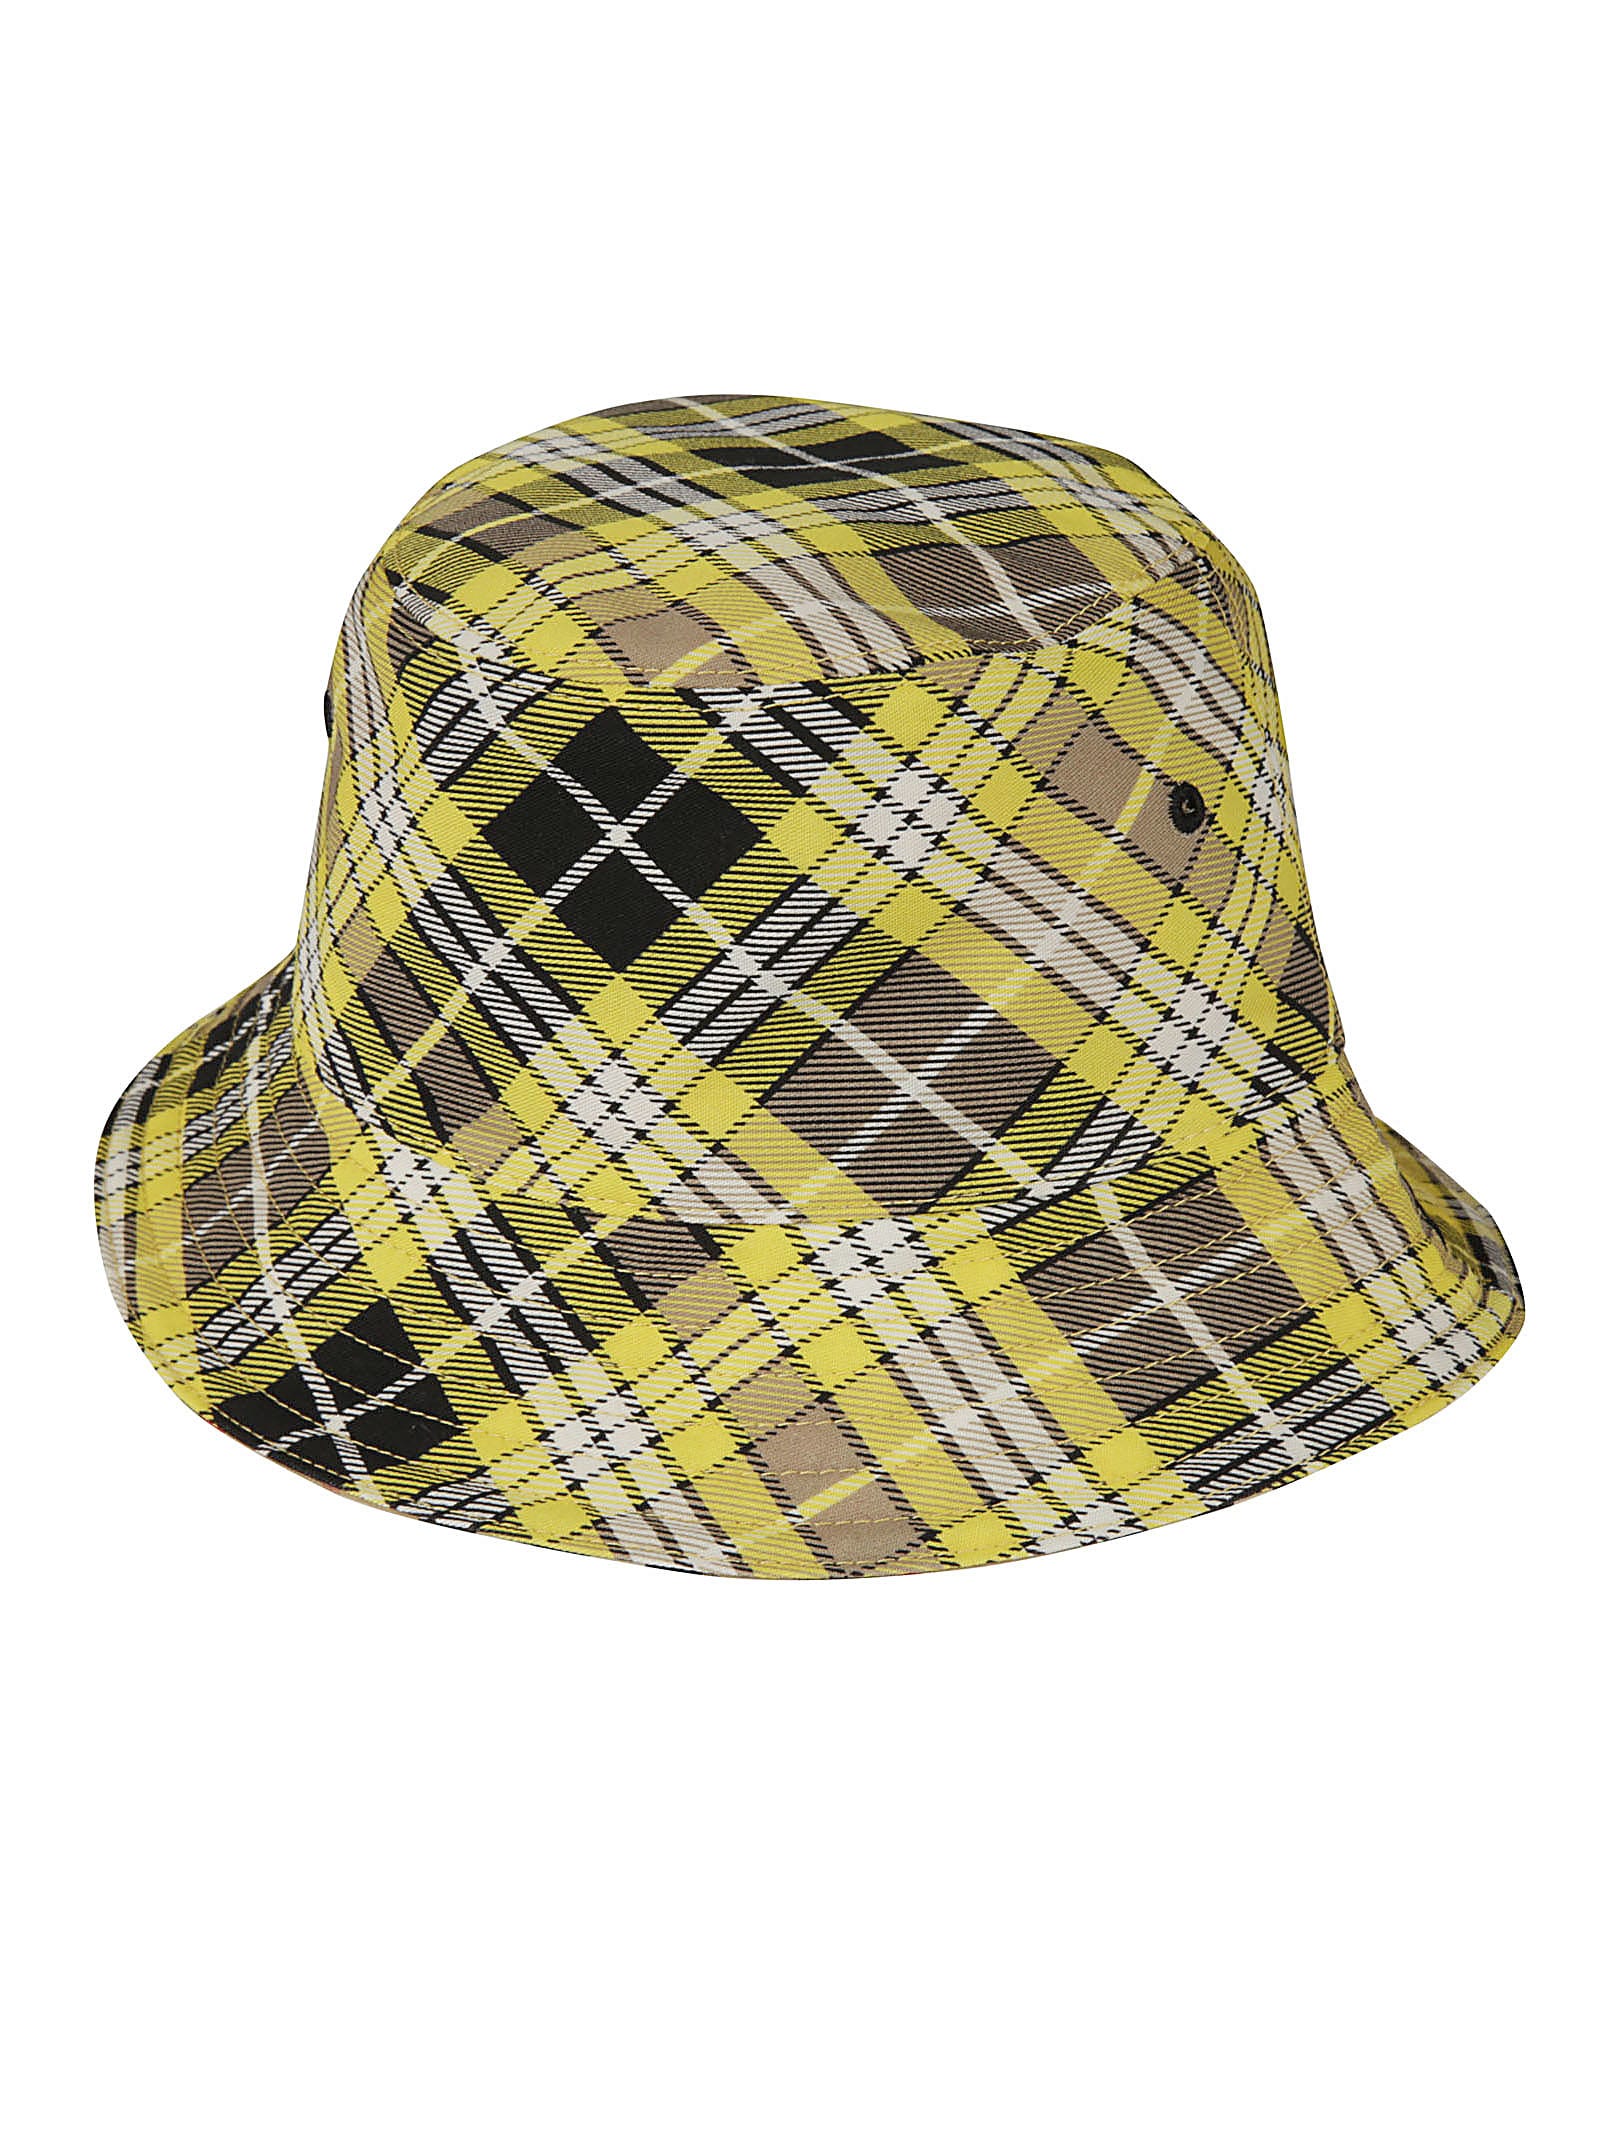 Burberry Giant Check Reversible Bucket Hat